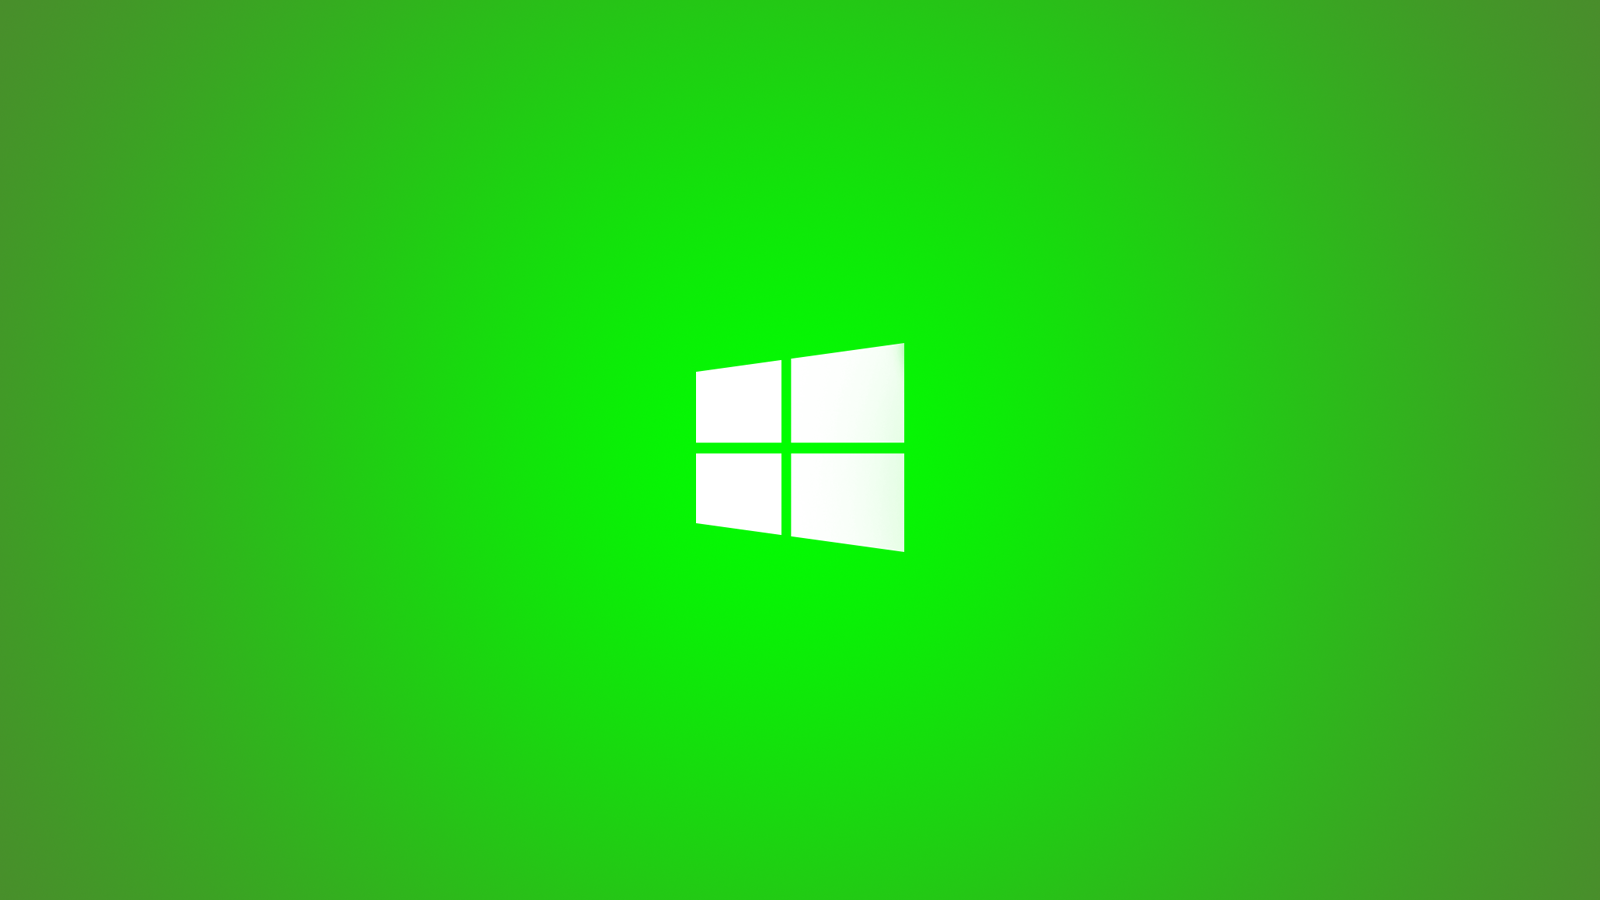 Windows 8 Hd Green Wallpaper Full Free HD Backgrounds